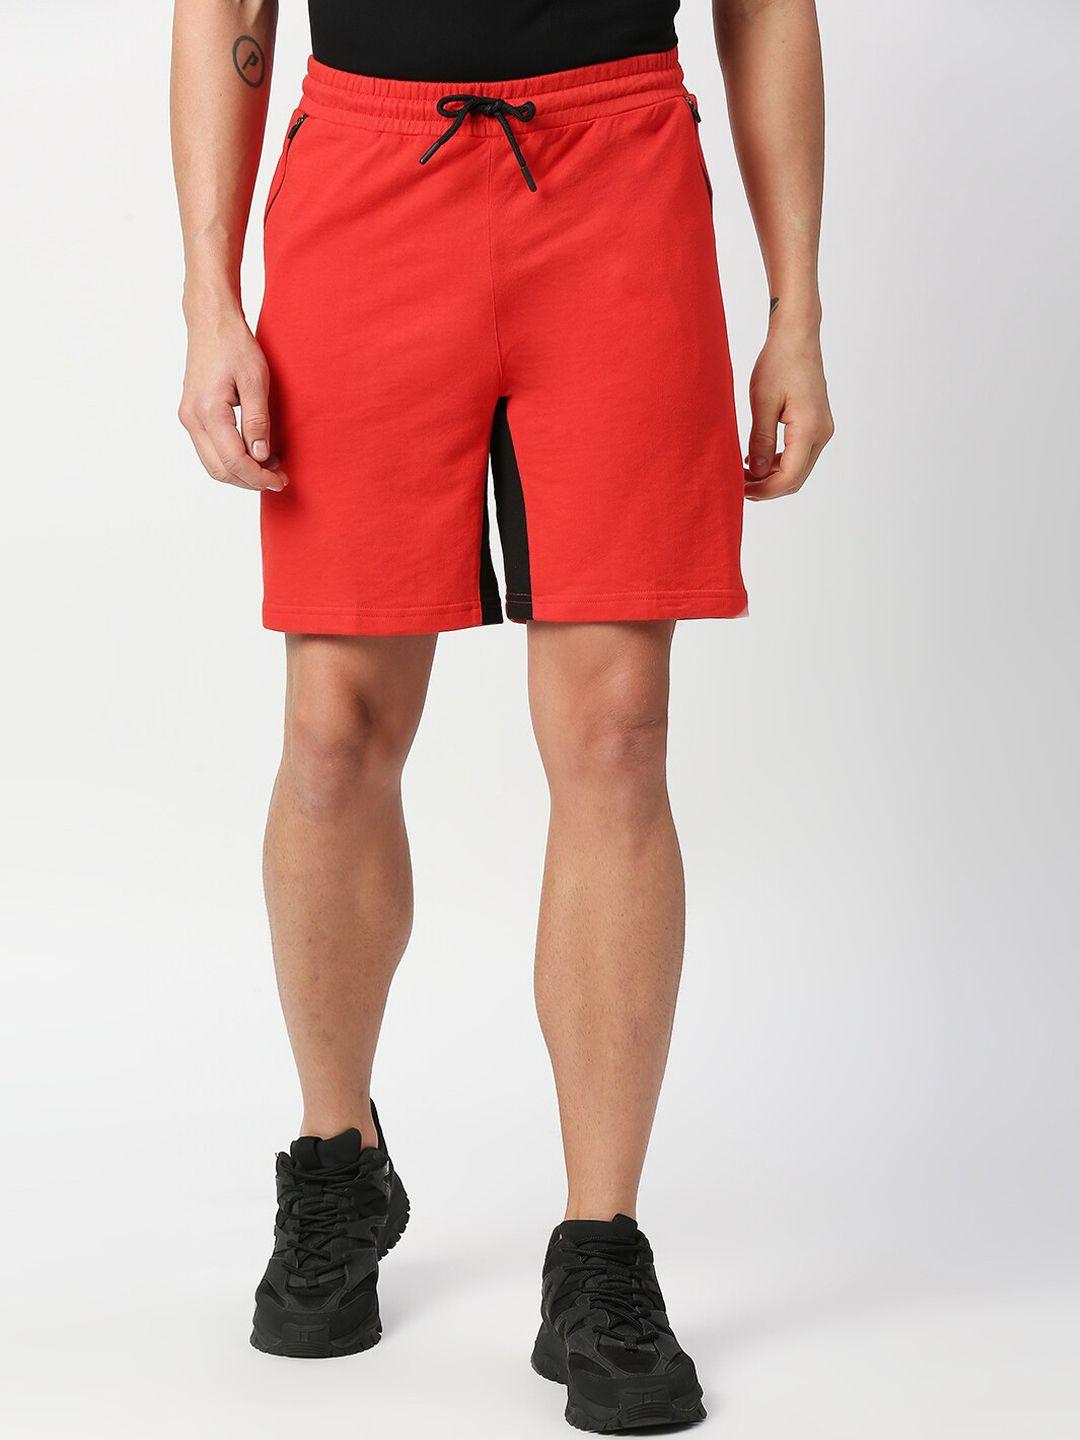 fitz-men-red-slim-fit-running-sports-shorts